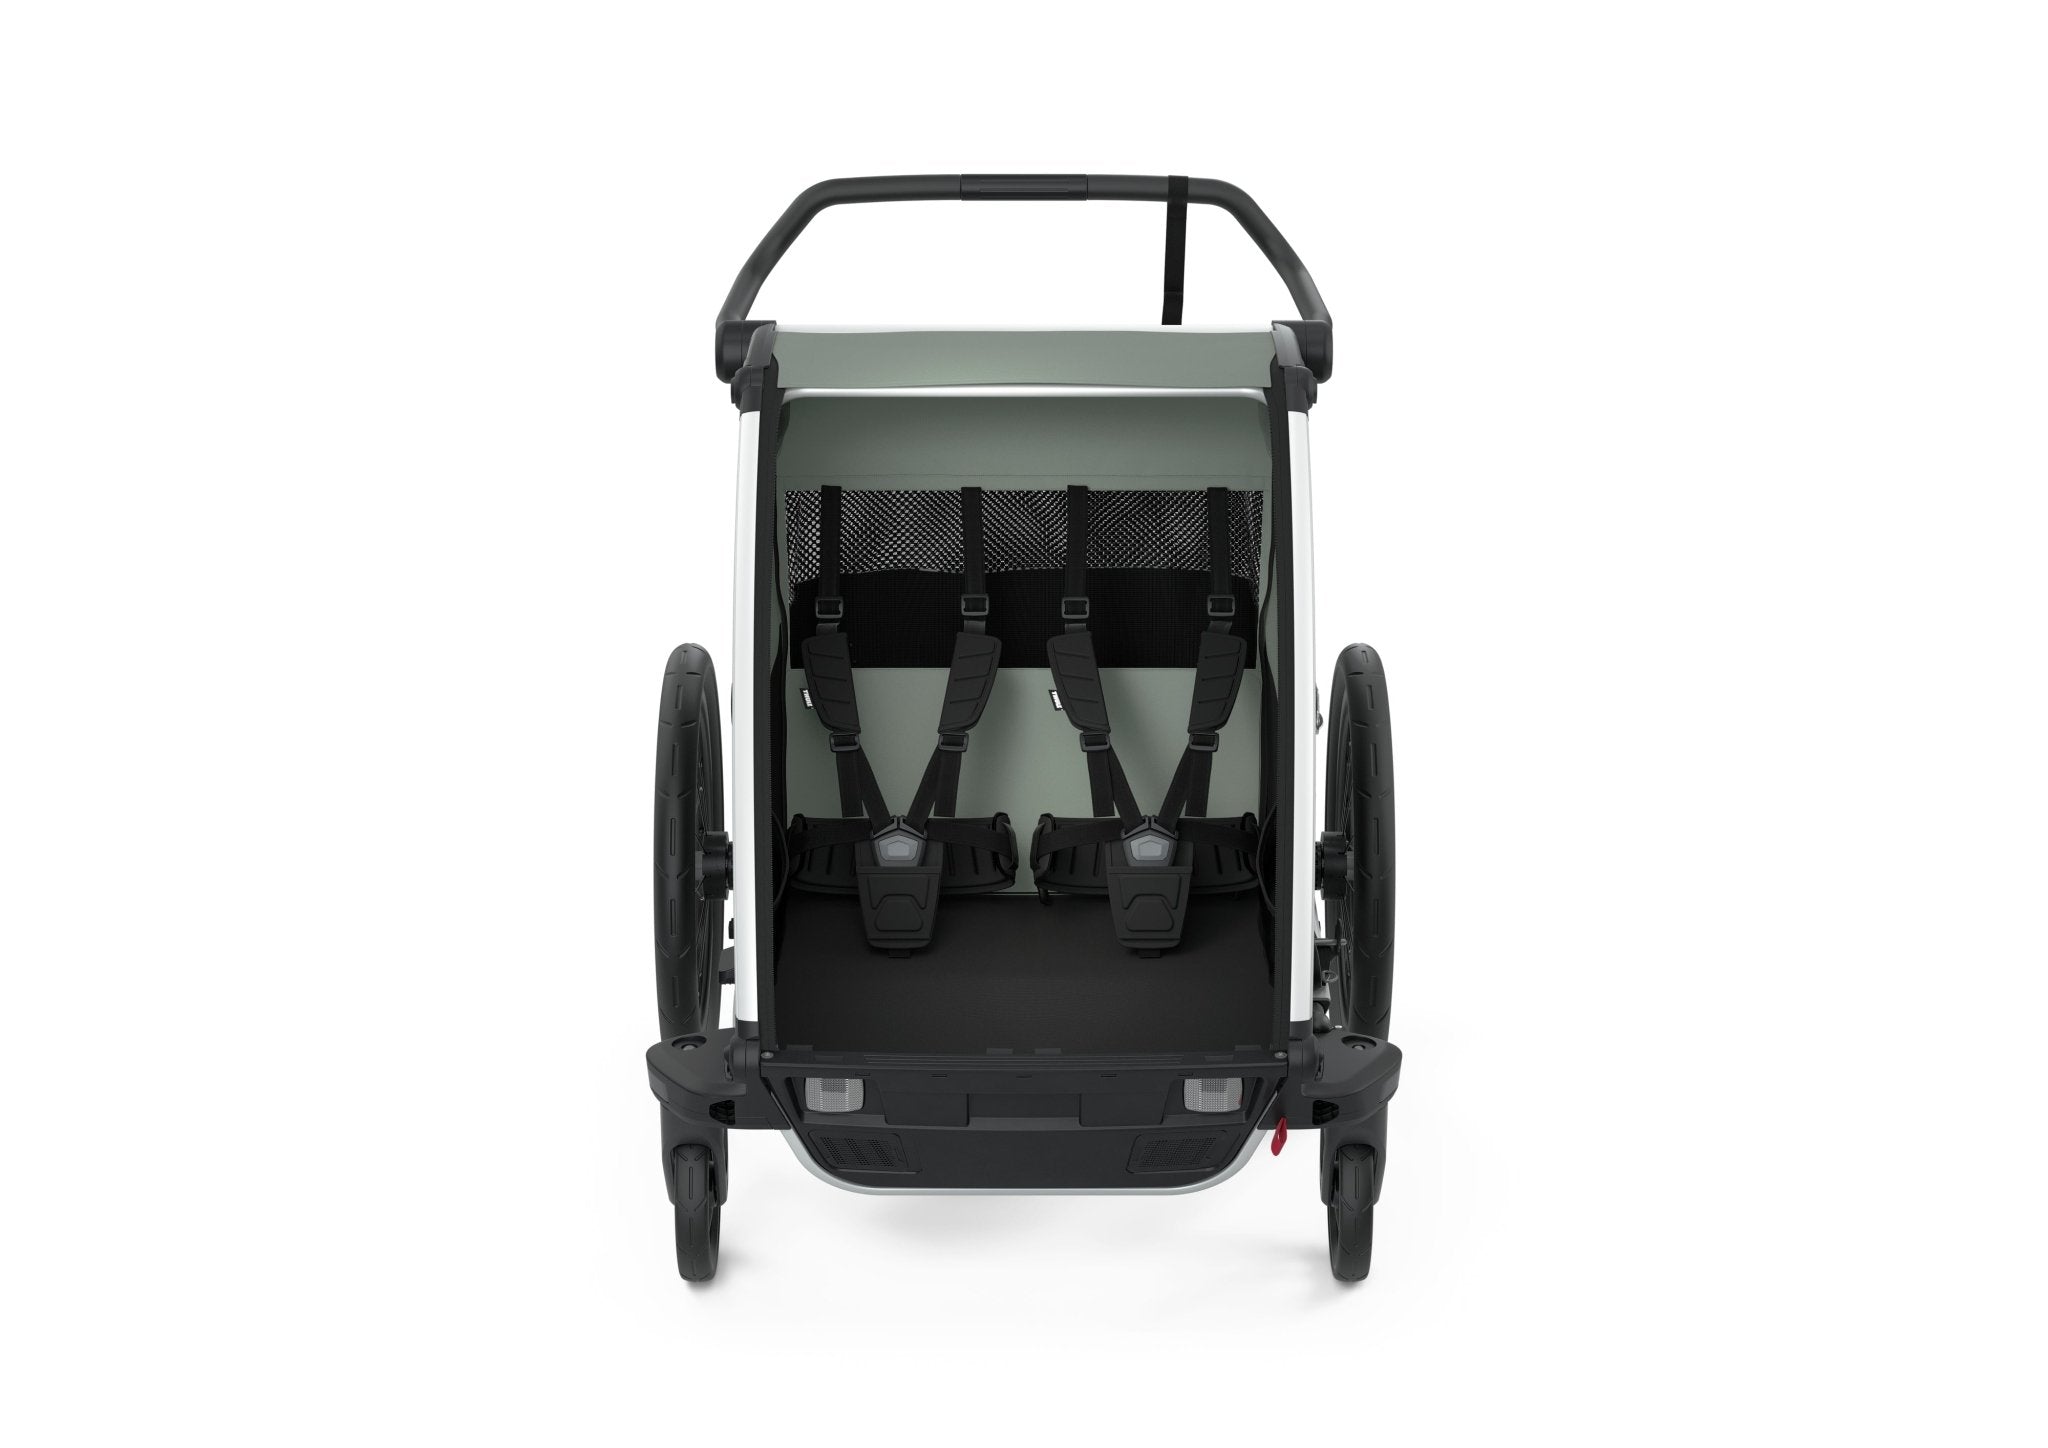 Thule Chariot Lite 2 Multisport Trailer & Stroller, Agave - ANB Baby -$1000 - $2000